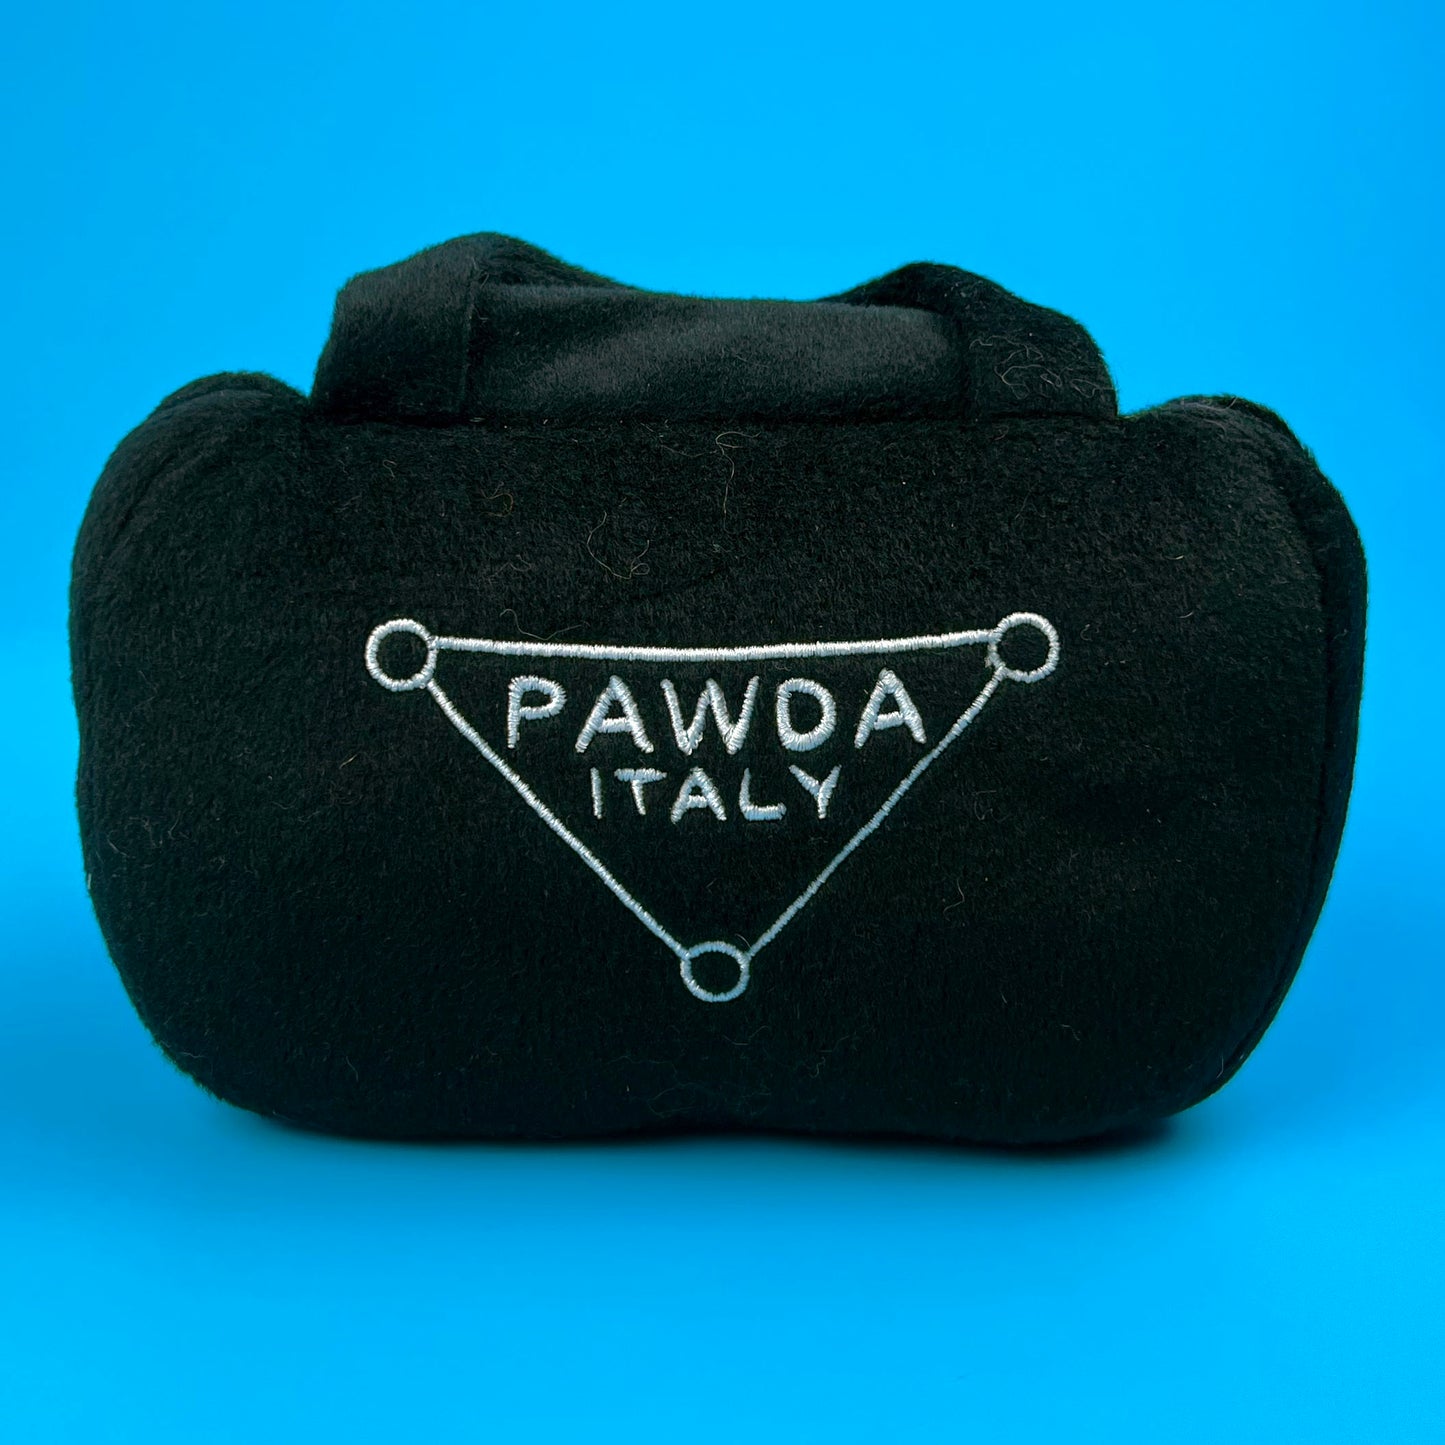 Pawda Classic Hand Bag bearsupreme